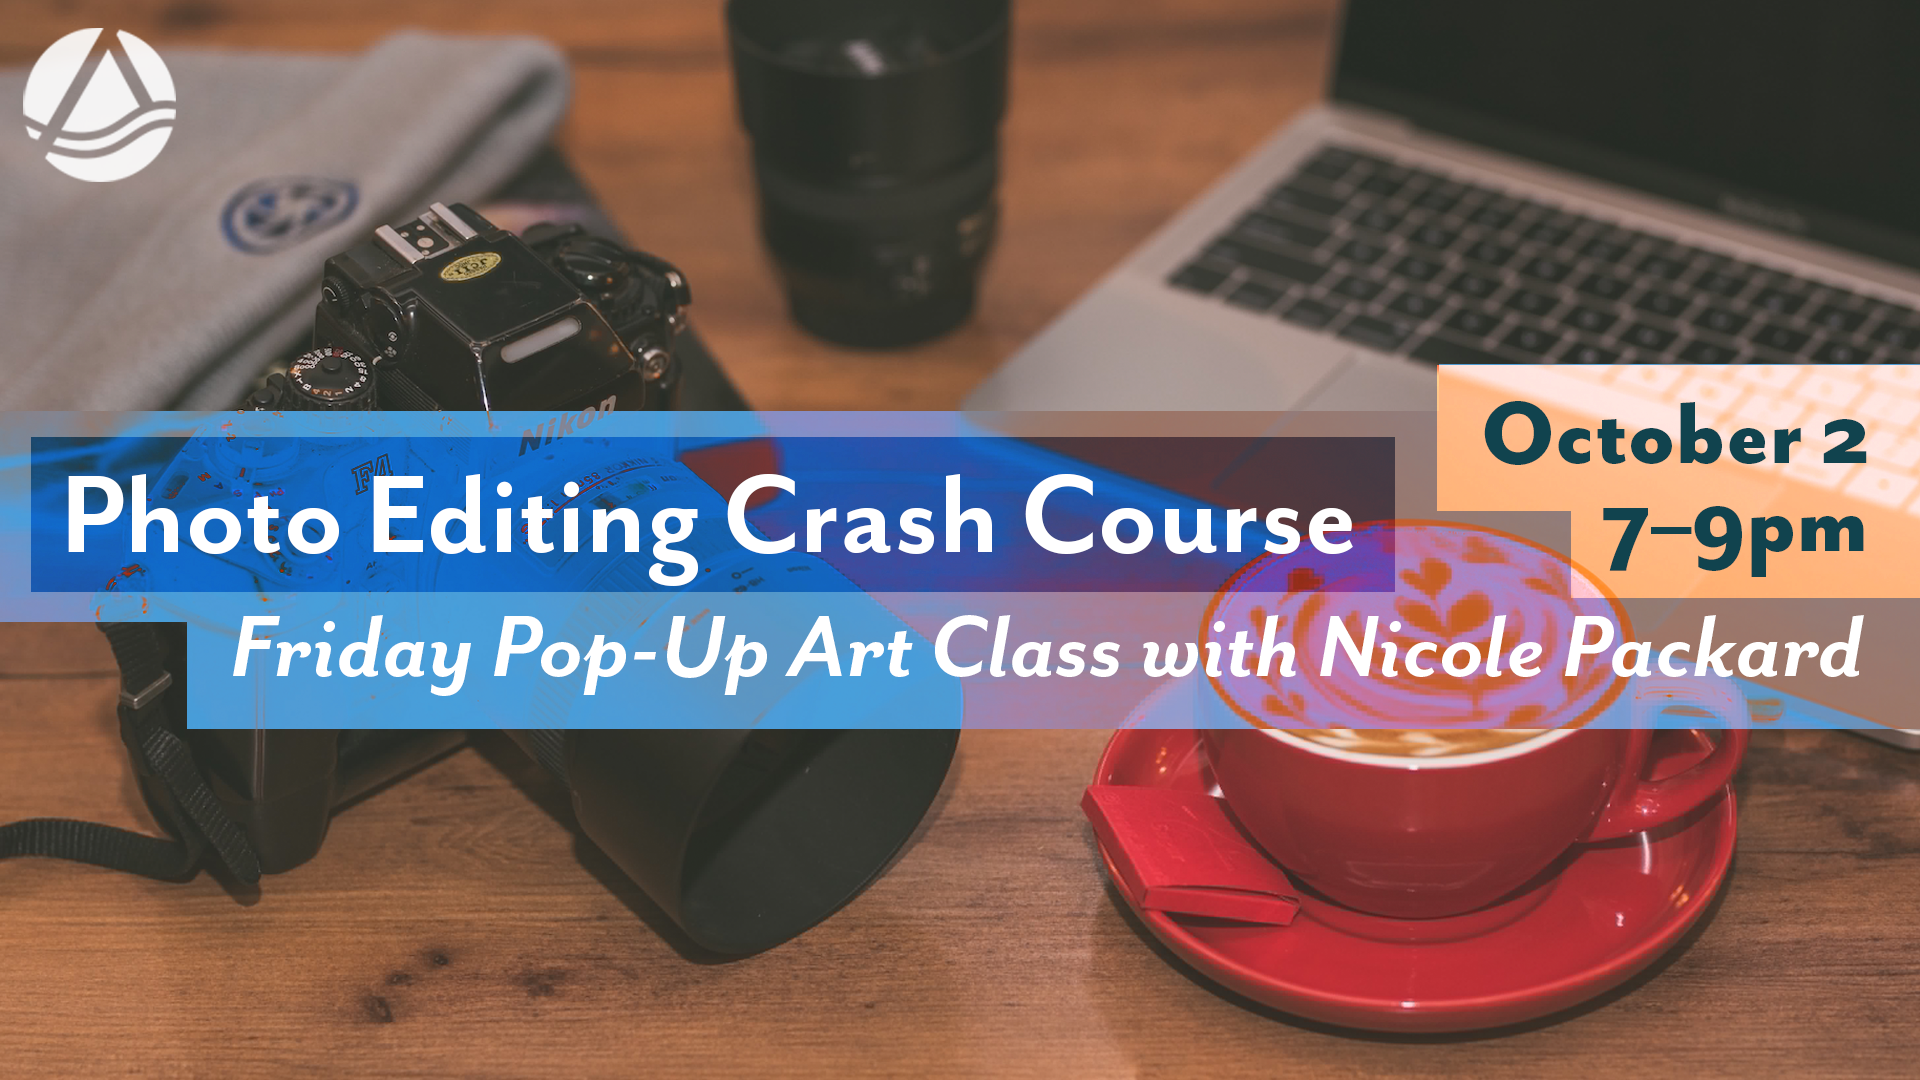 Photo Editing Crash Course - Pop-Up Art Class Online via Zoom August 17, 2020